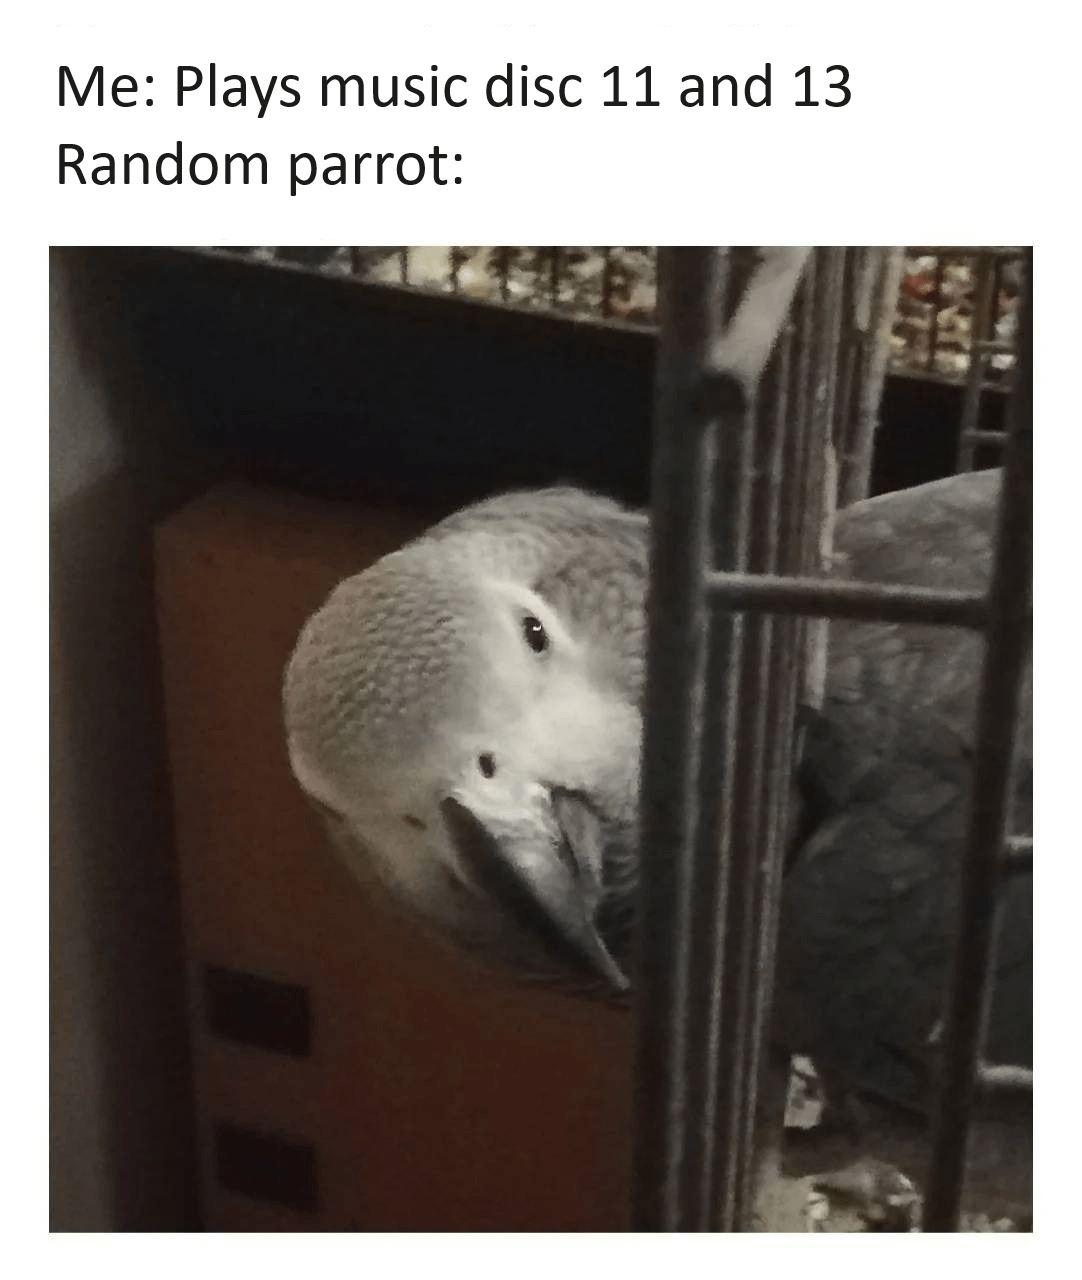 Minecraft Memes - "Parrot antics in Minecraft"